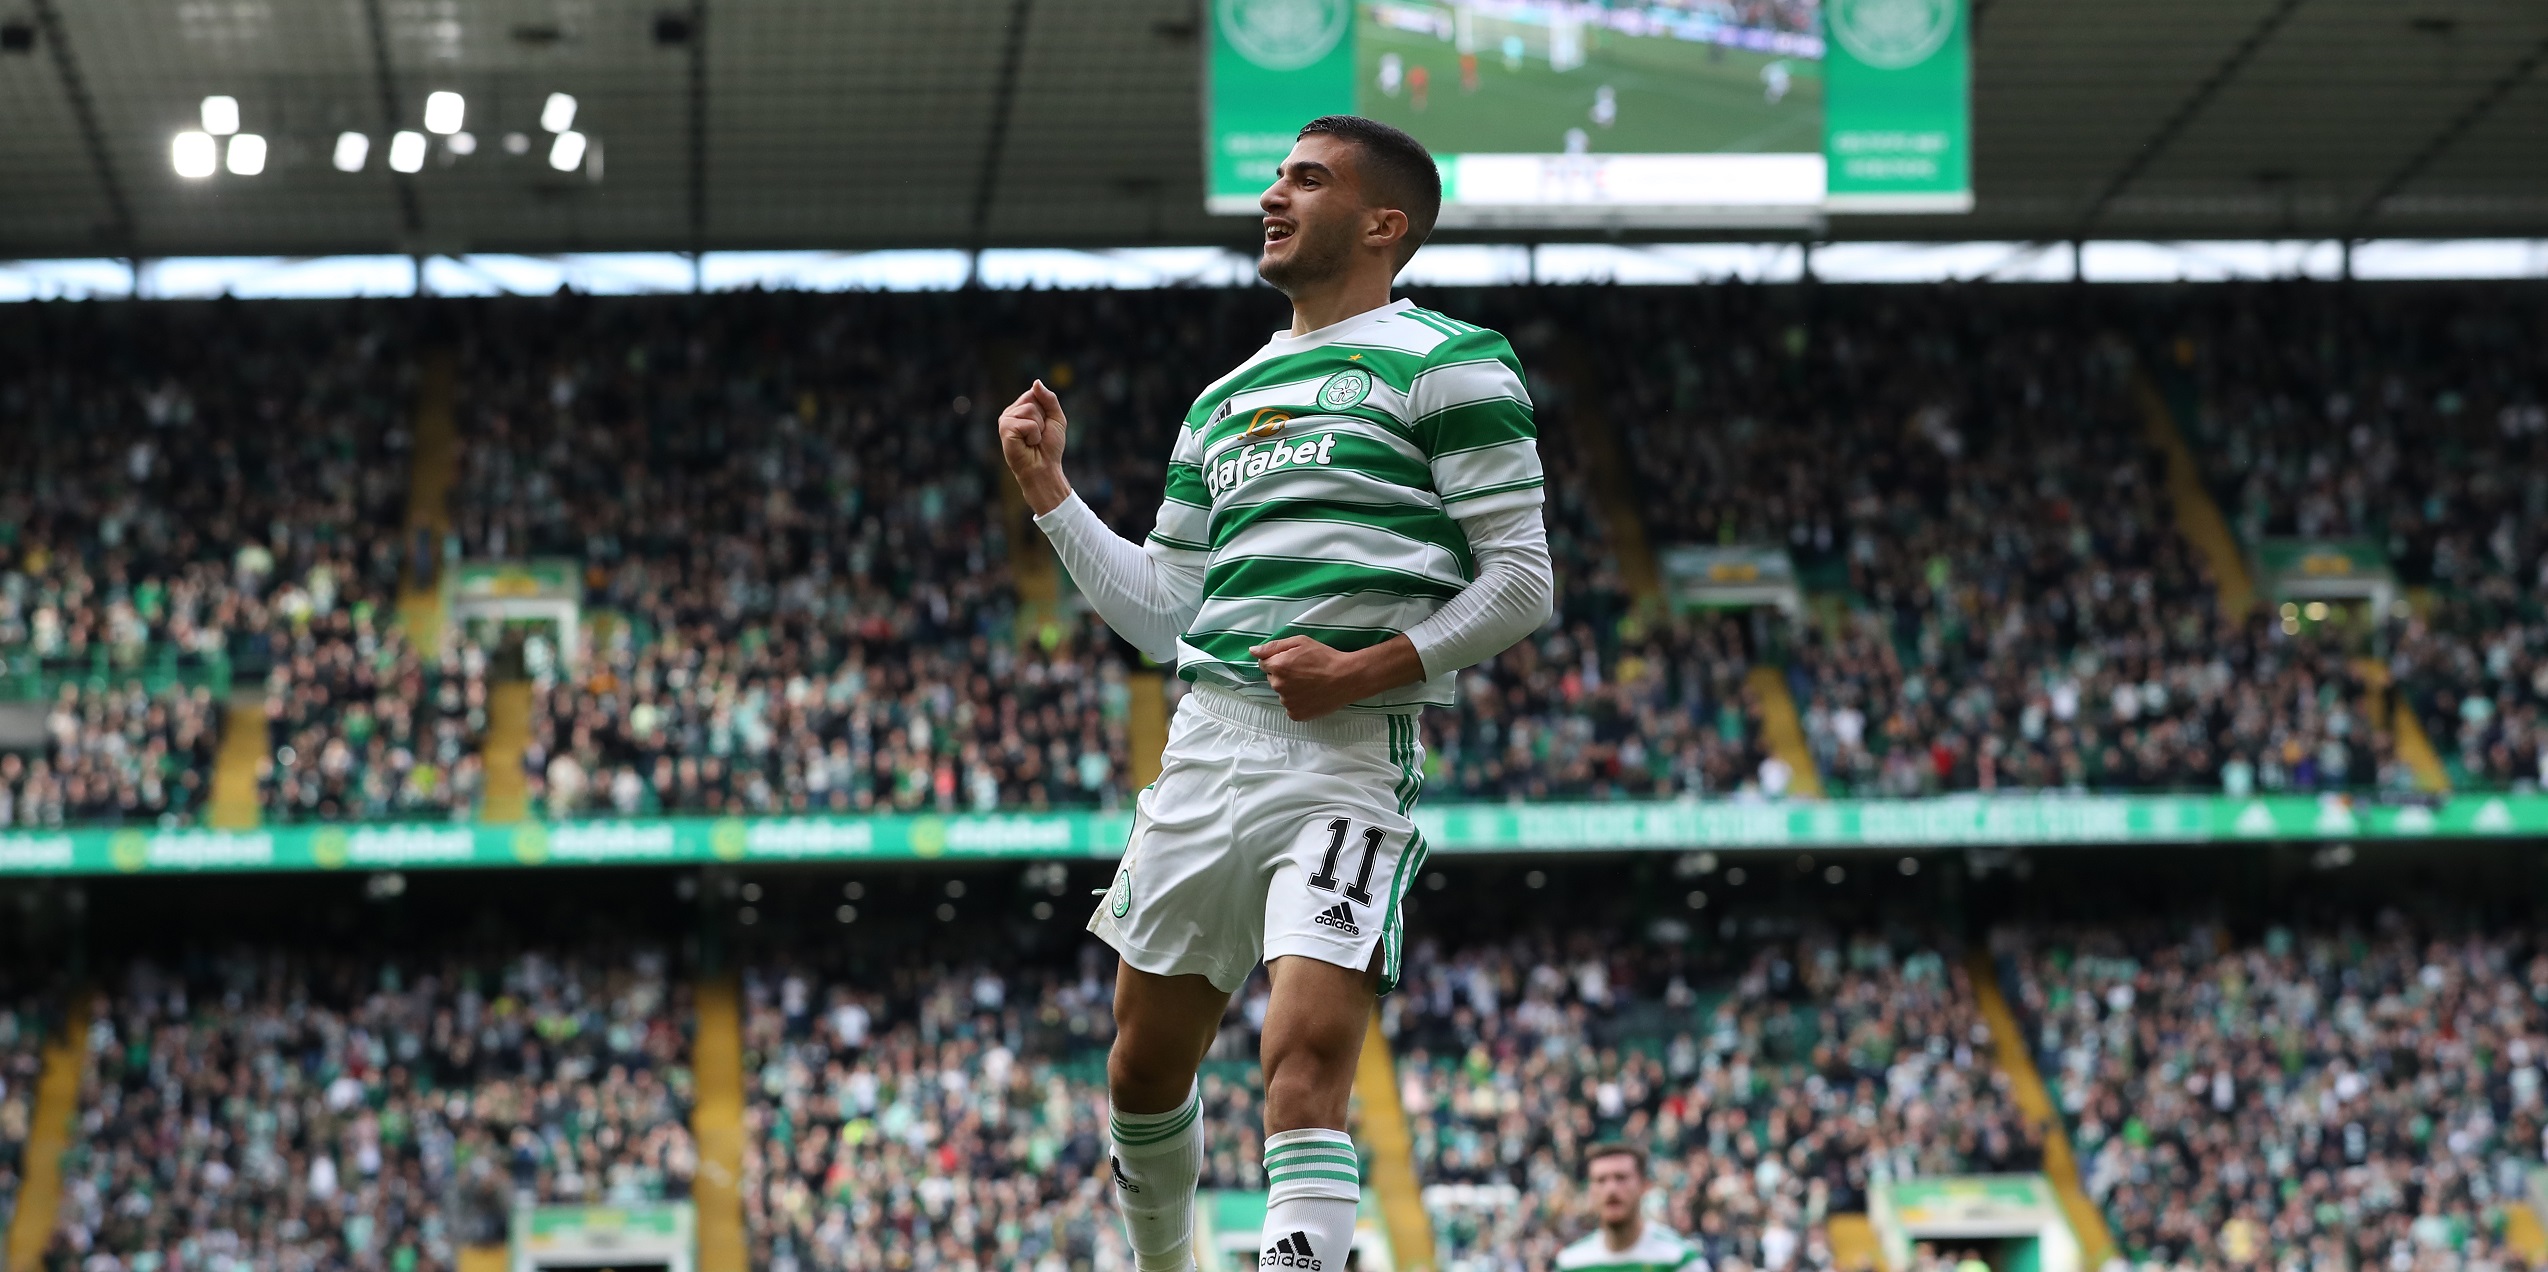 Celtic striker sets ‘dream’ Liverpool goal only three months after Glasgow arrival